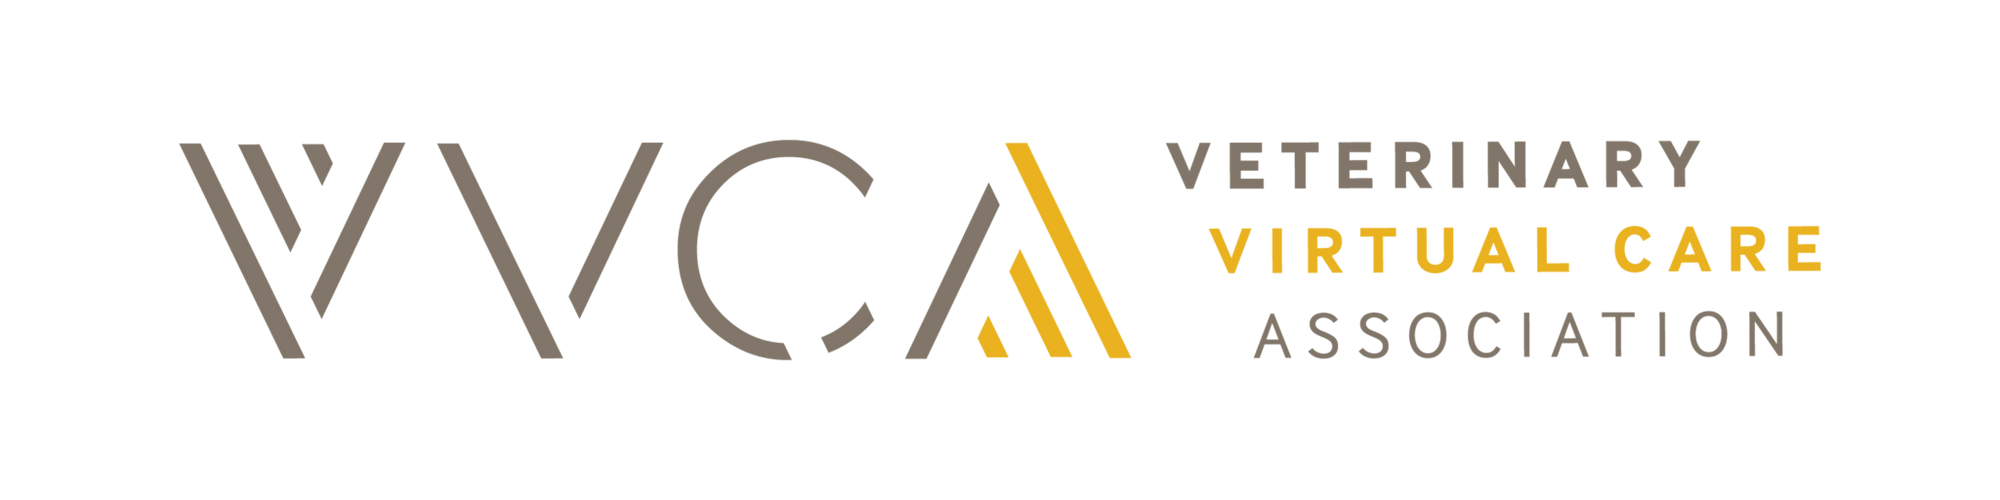 New VVCA executive director named